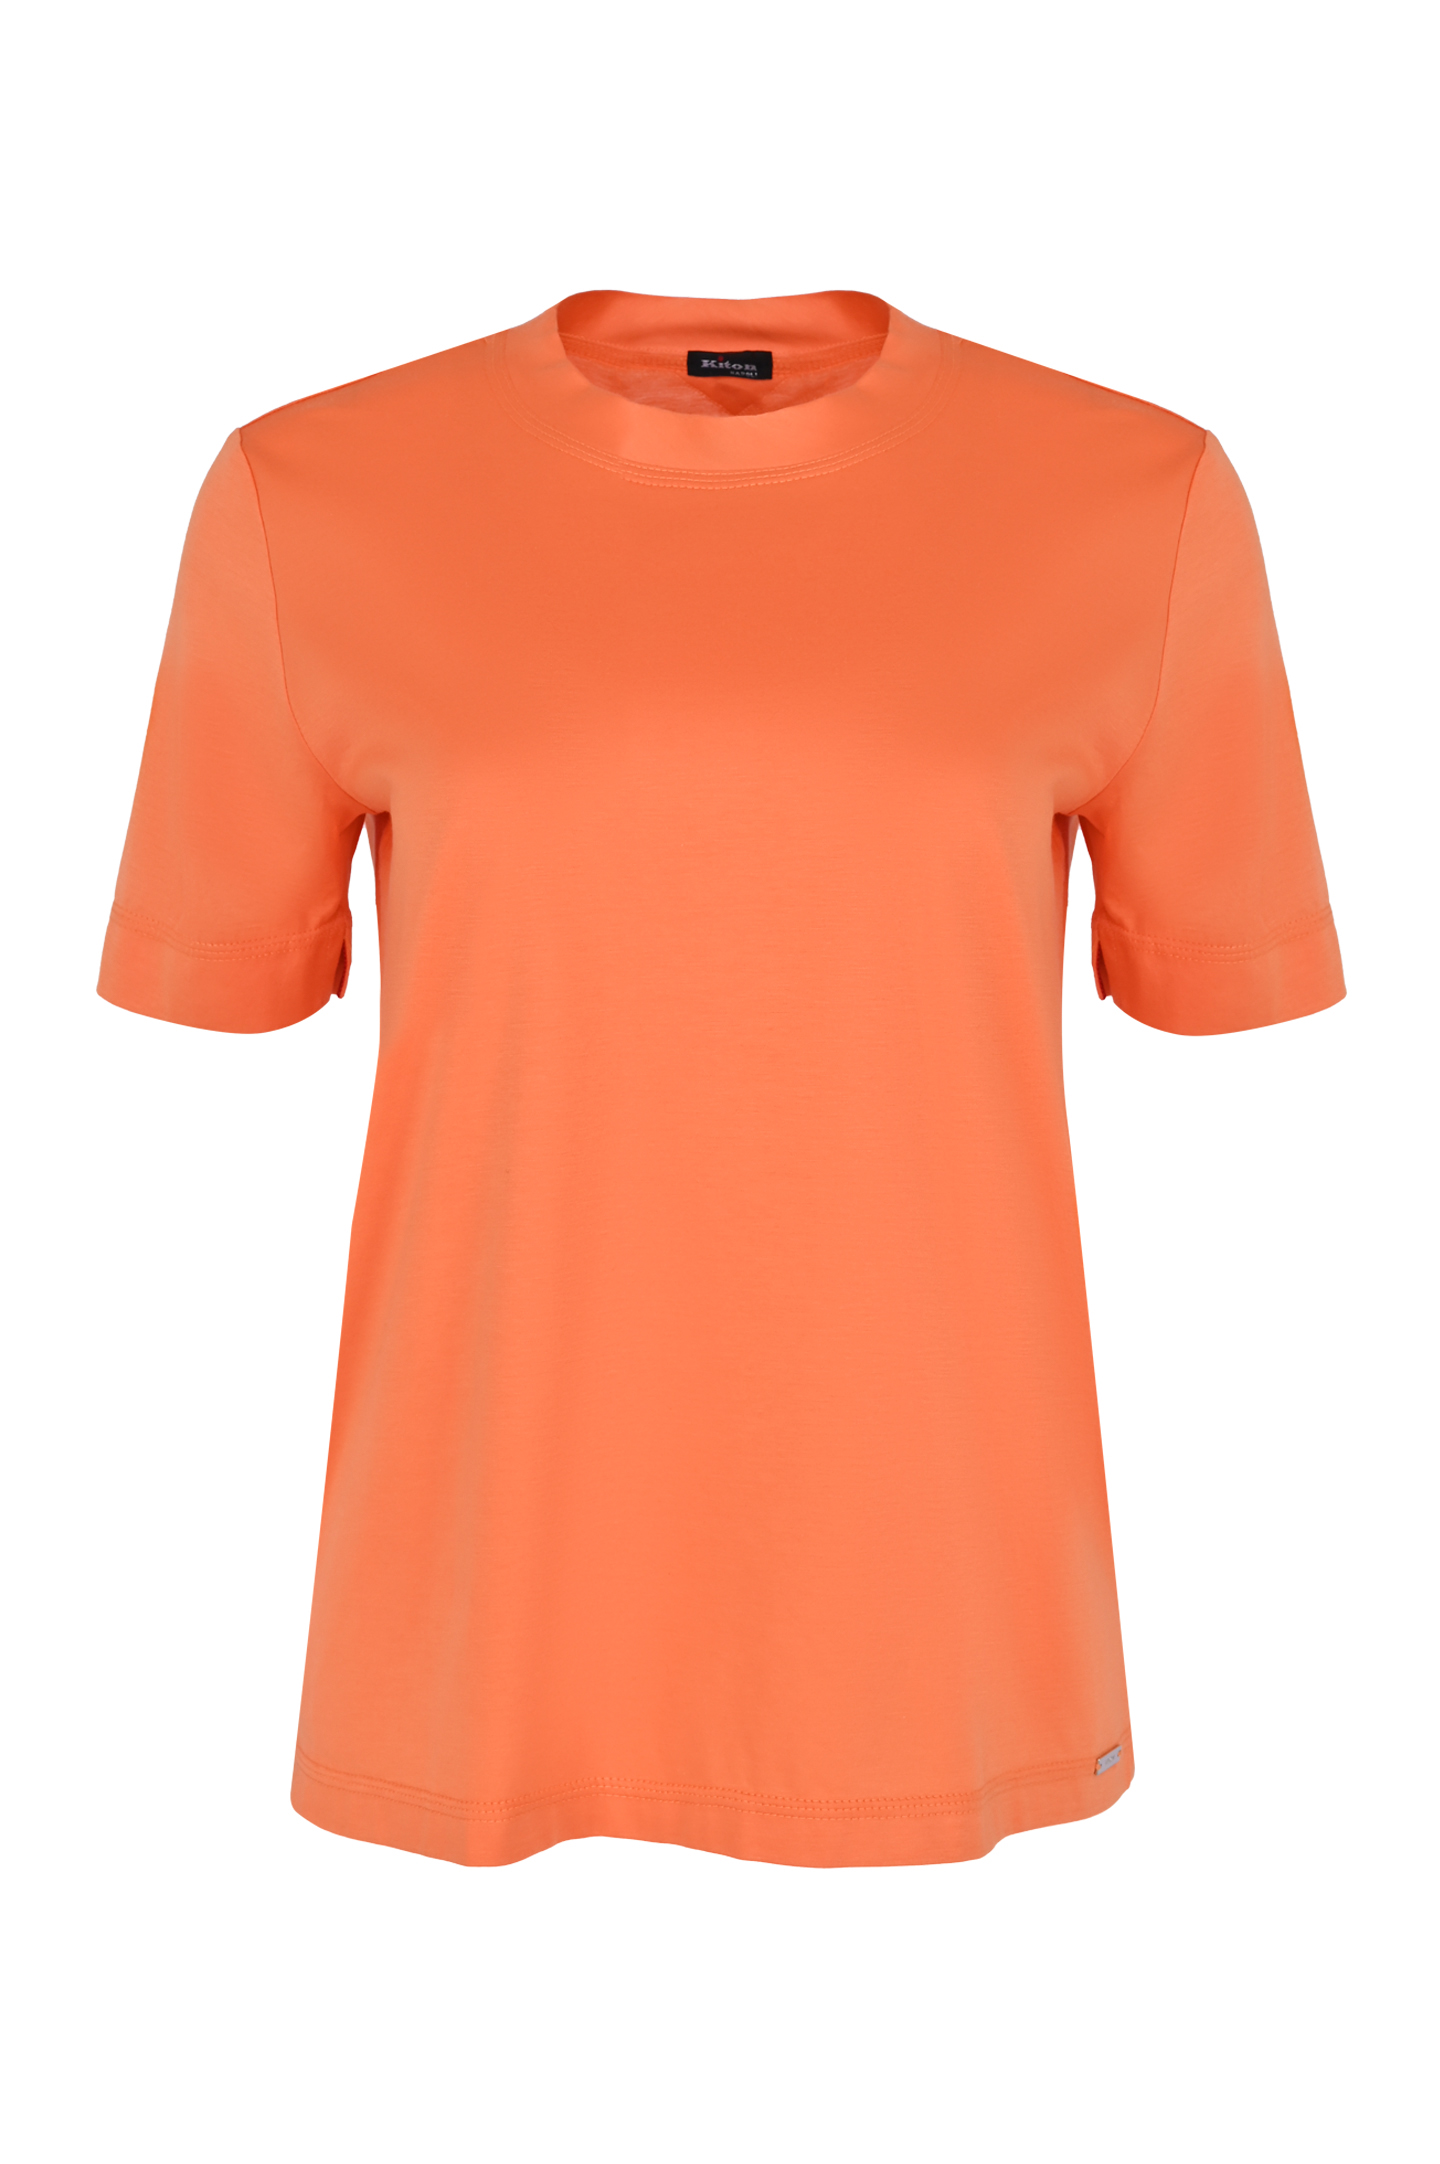 Футболка KITON D53450K06S370, цвет: Оранжевый, Женский